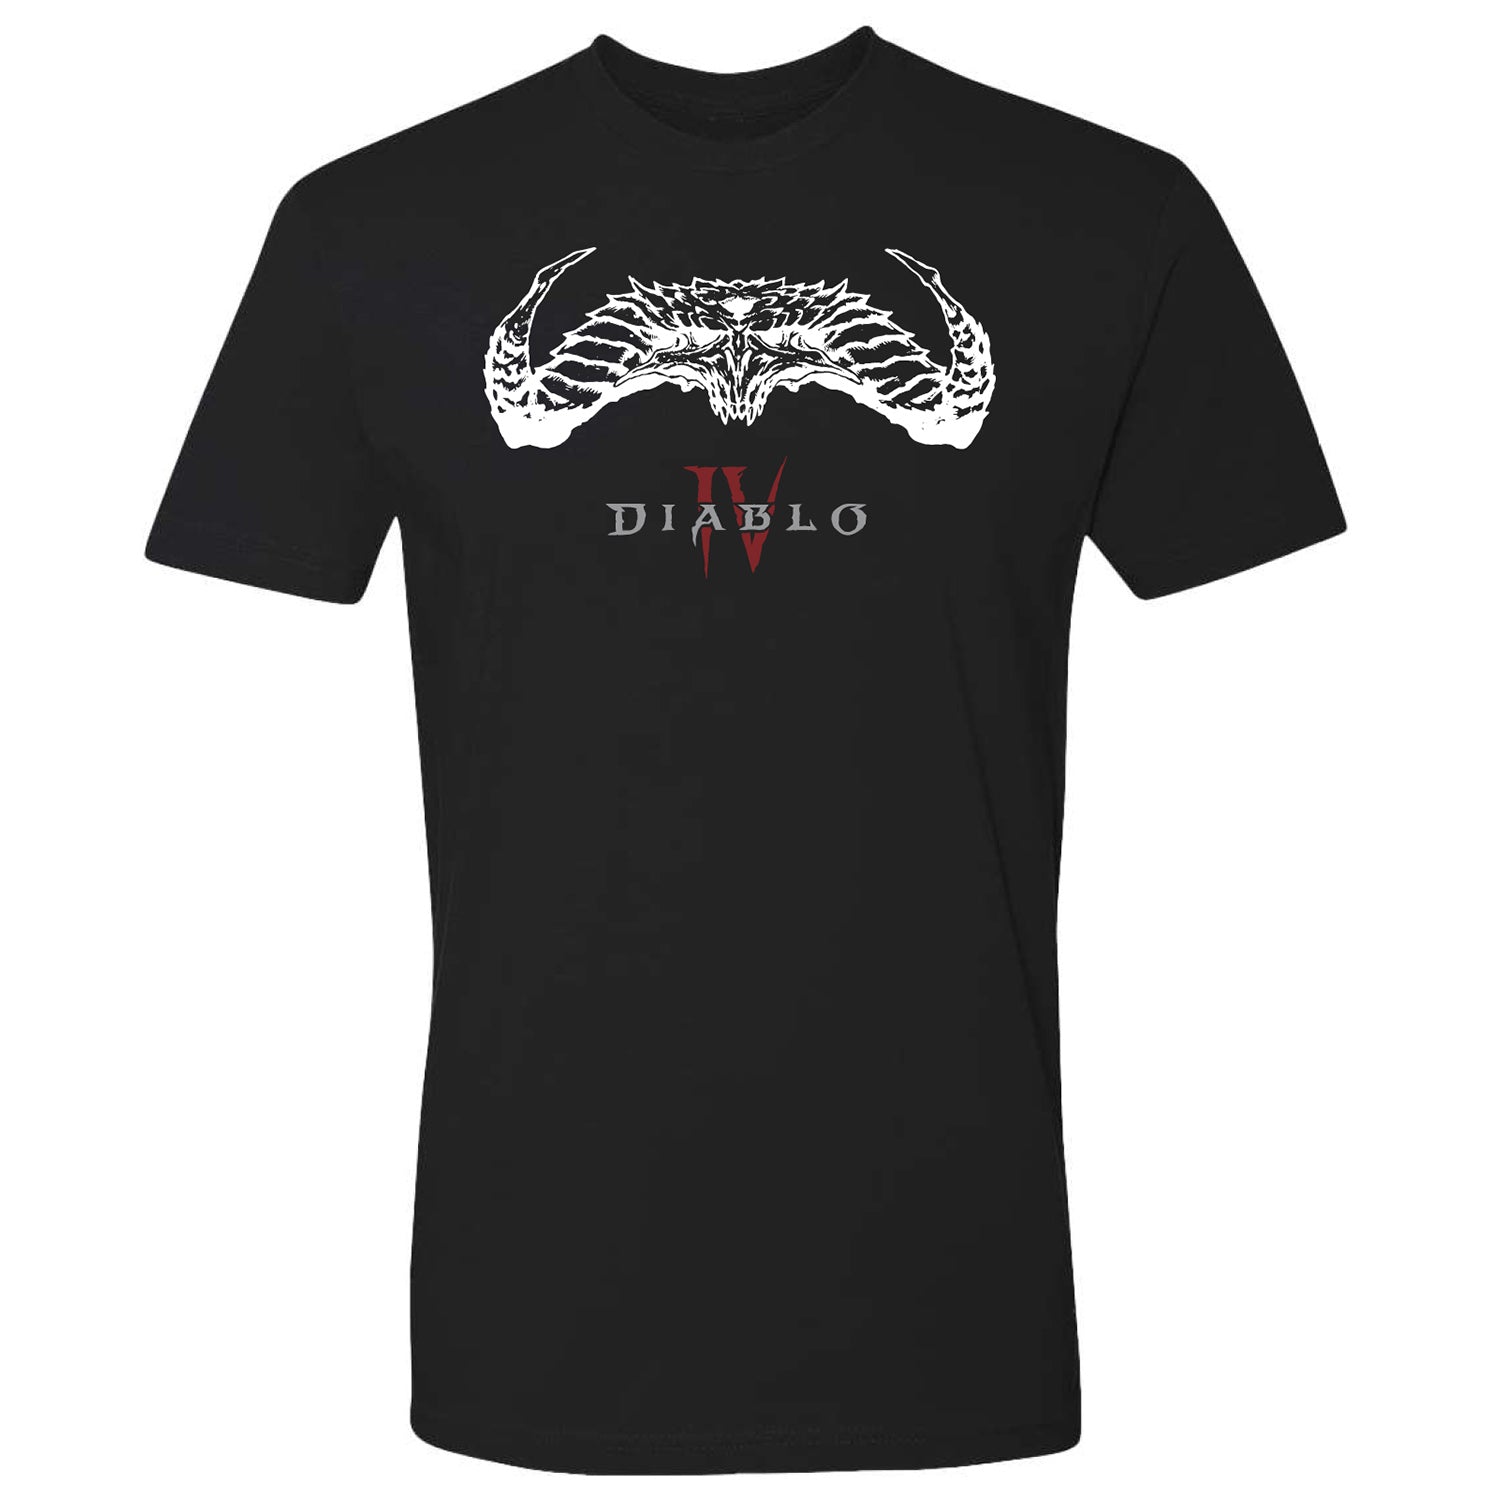 Diablo IV Skull T-Shirt - Front View Black Version